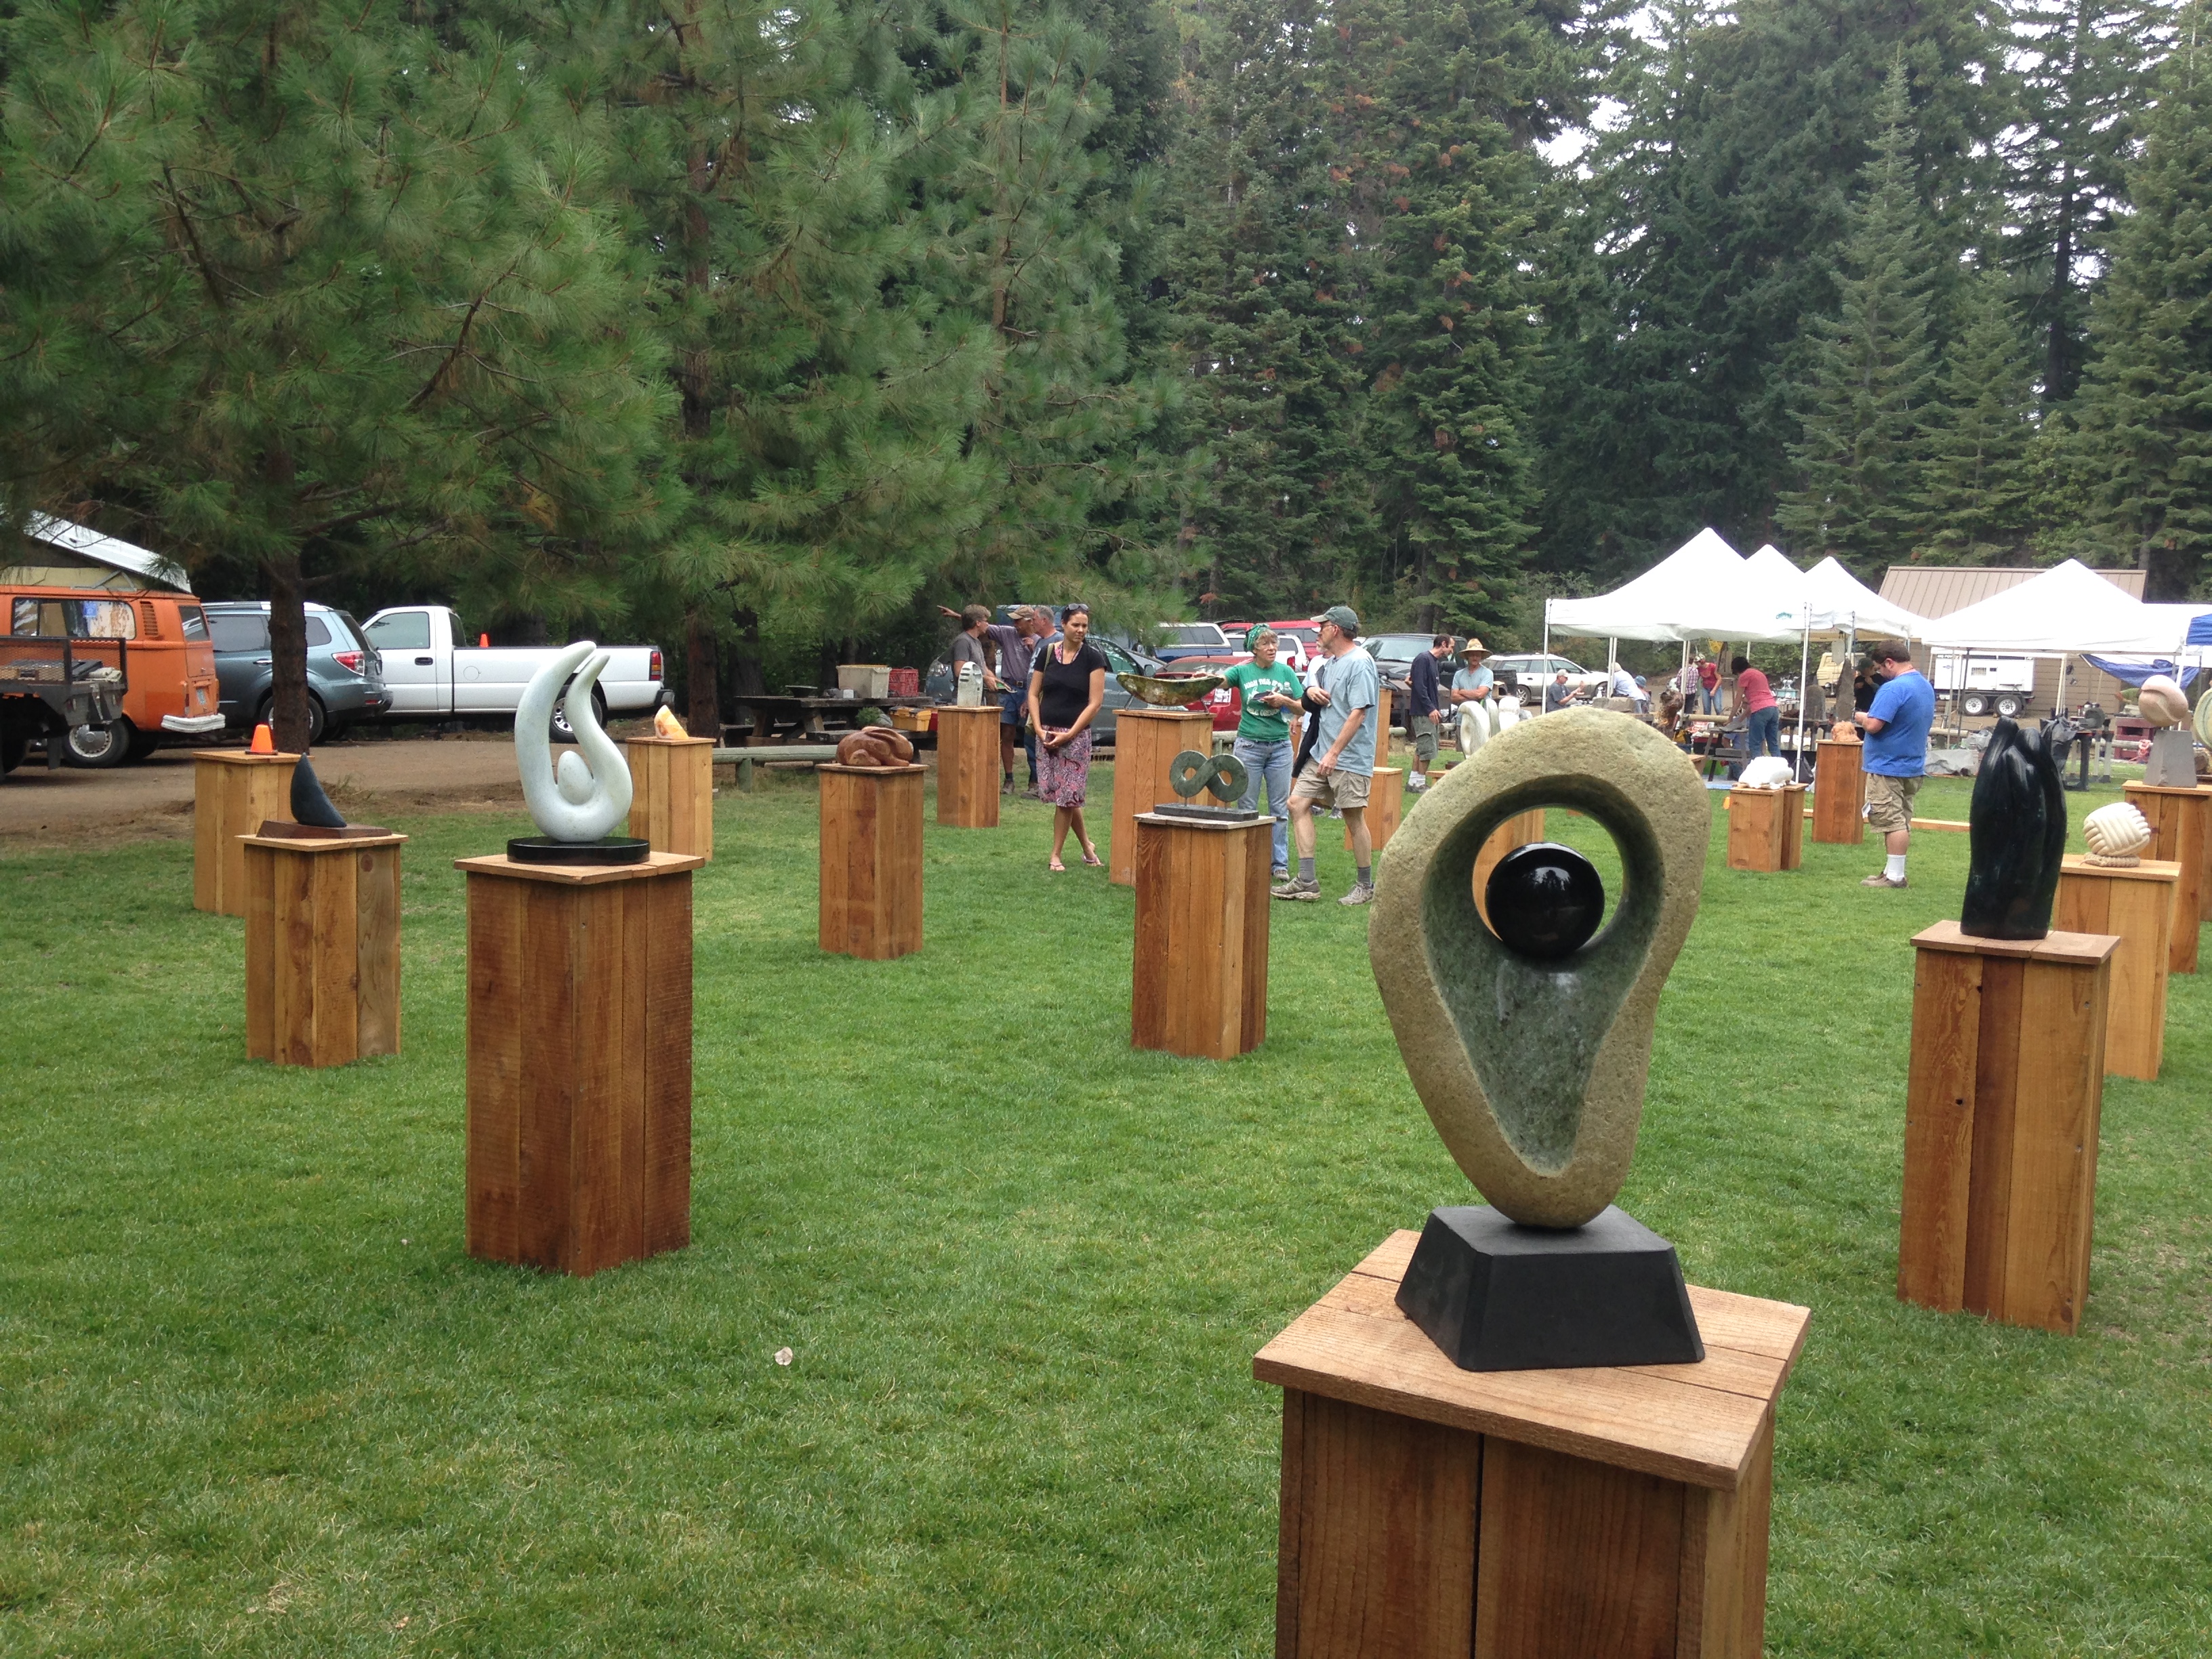 Suttle Lake Outdoor Sculpture Show